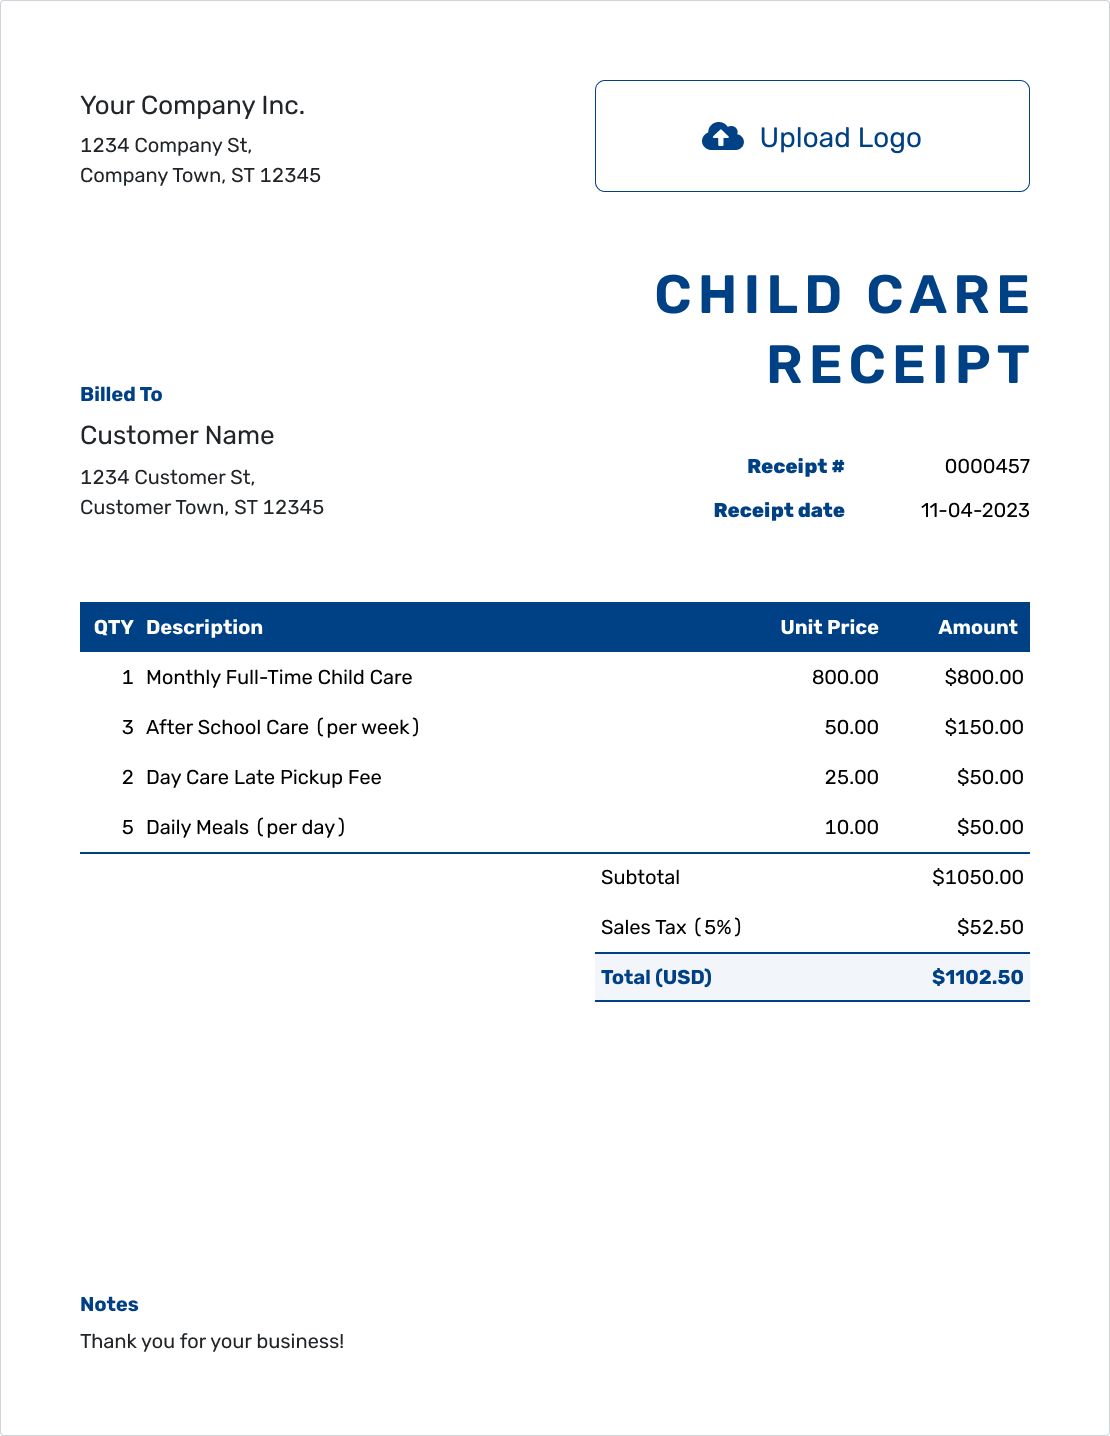 Sample Child Care Receipt Template